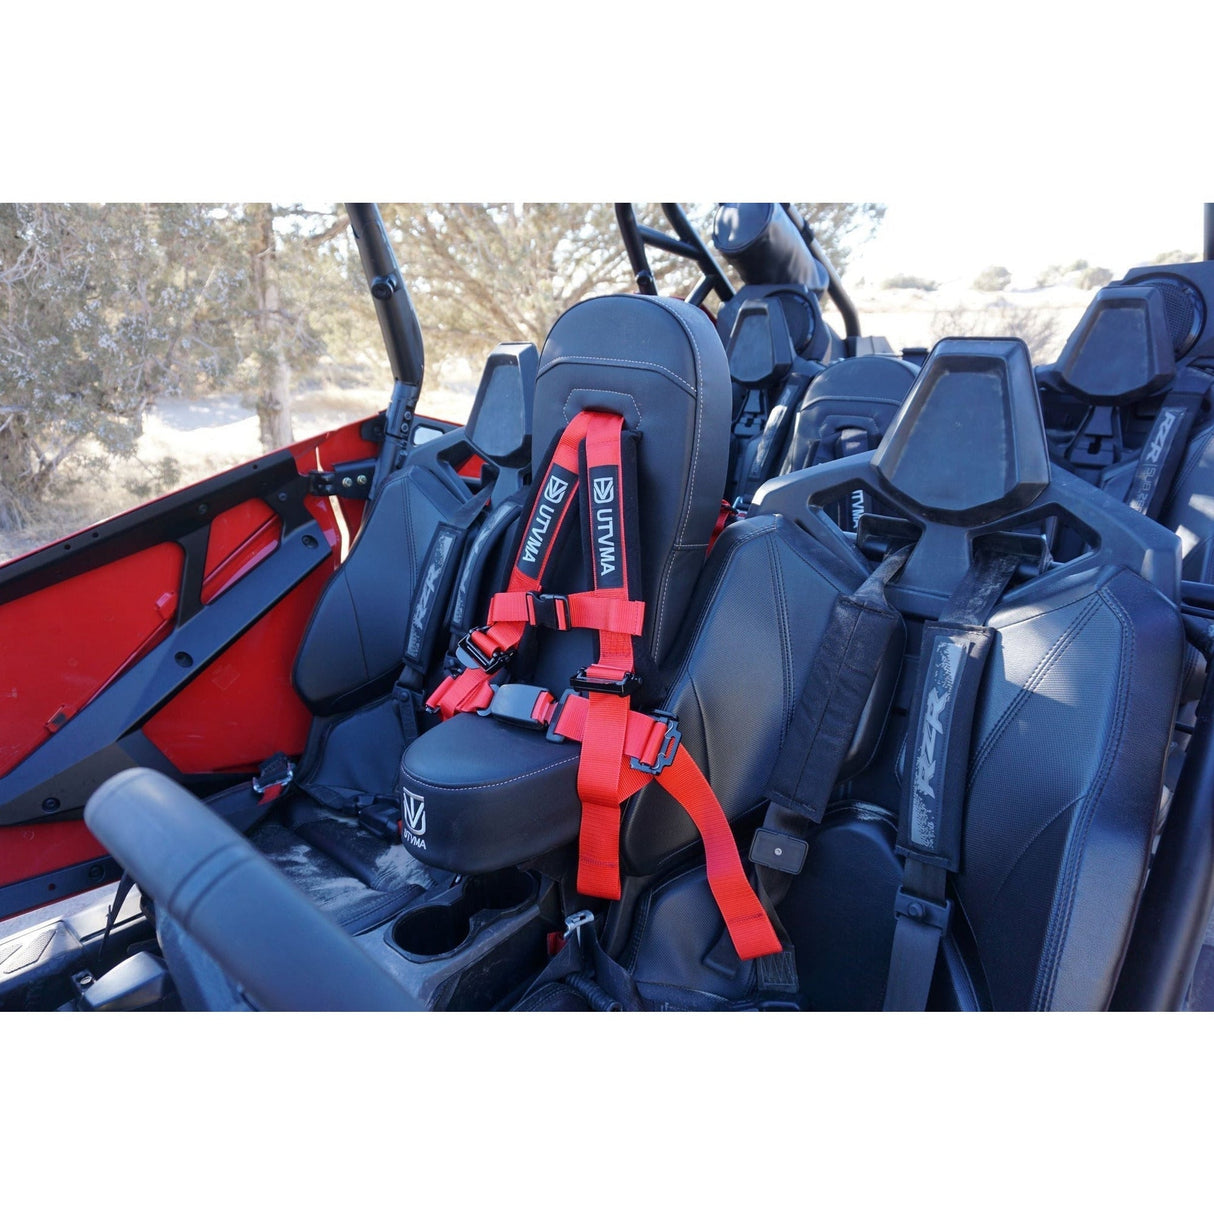 Polaris RZR Turbo R Bump Seat with Harness